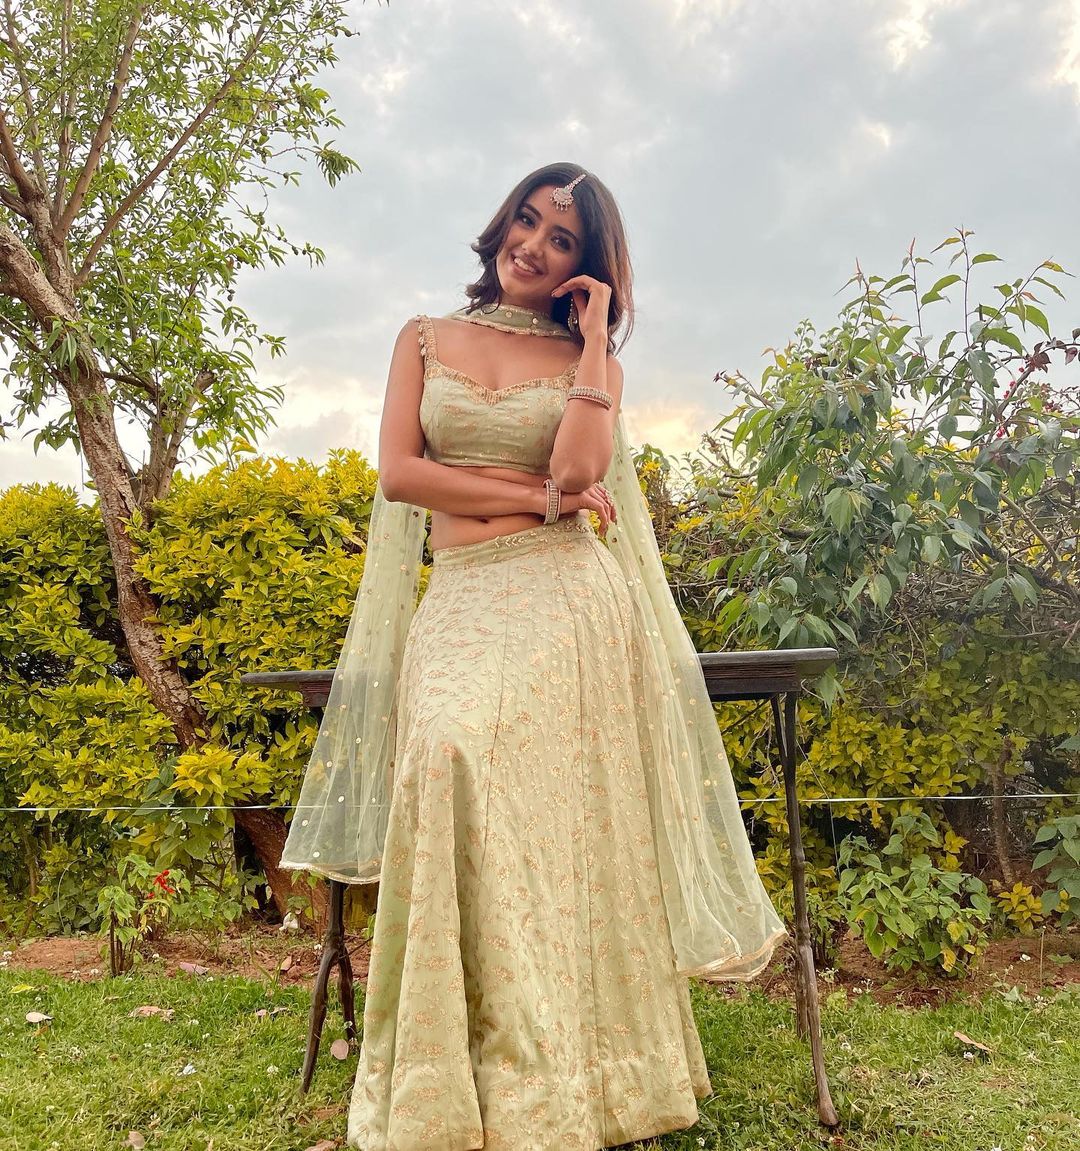 Malvika Sharma Look Fabulous In Green Lehenga With Sweet Heart Neck Blouse Malvika Sharma Simple yet Stunning Outfit Looks